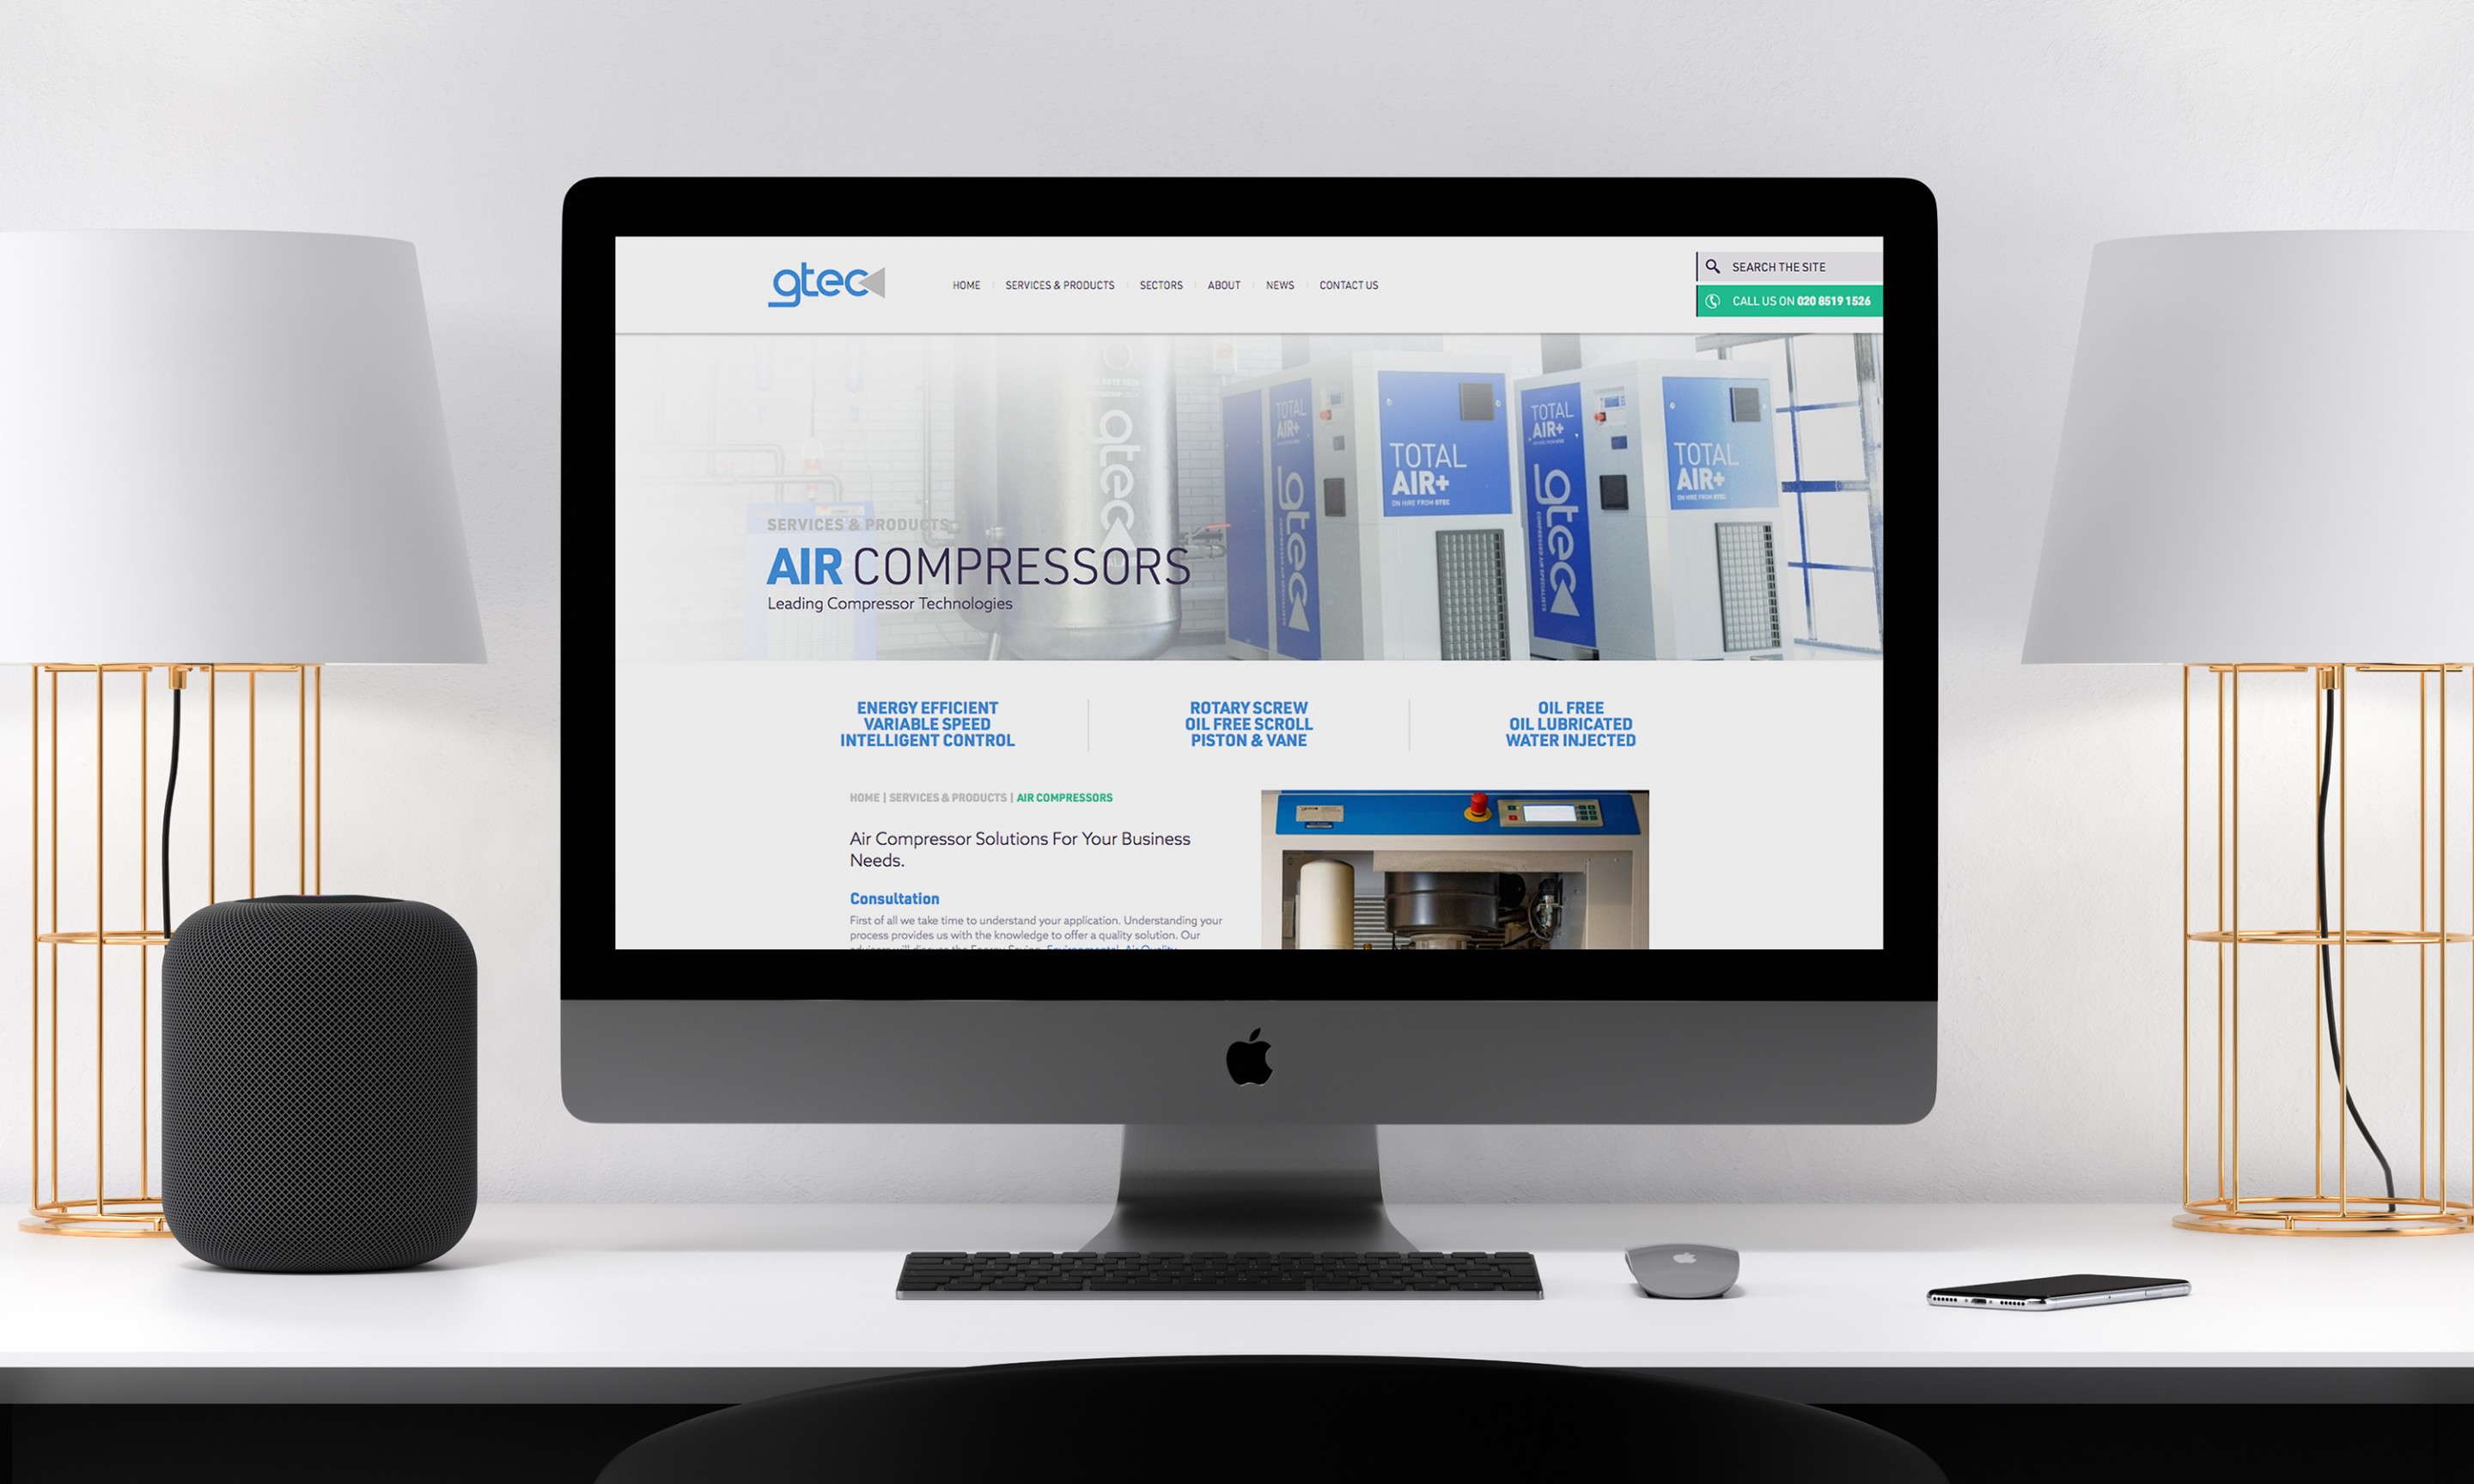 GTEC website design - internal page